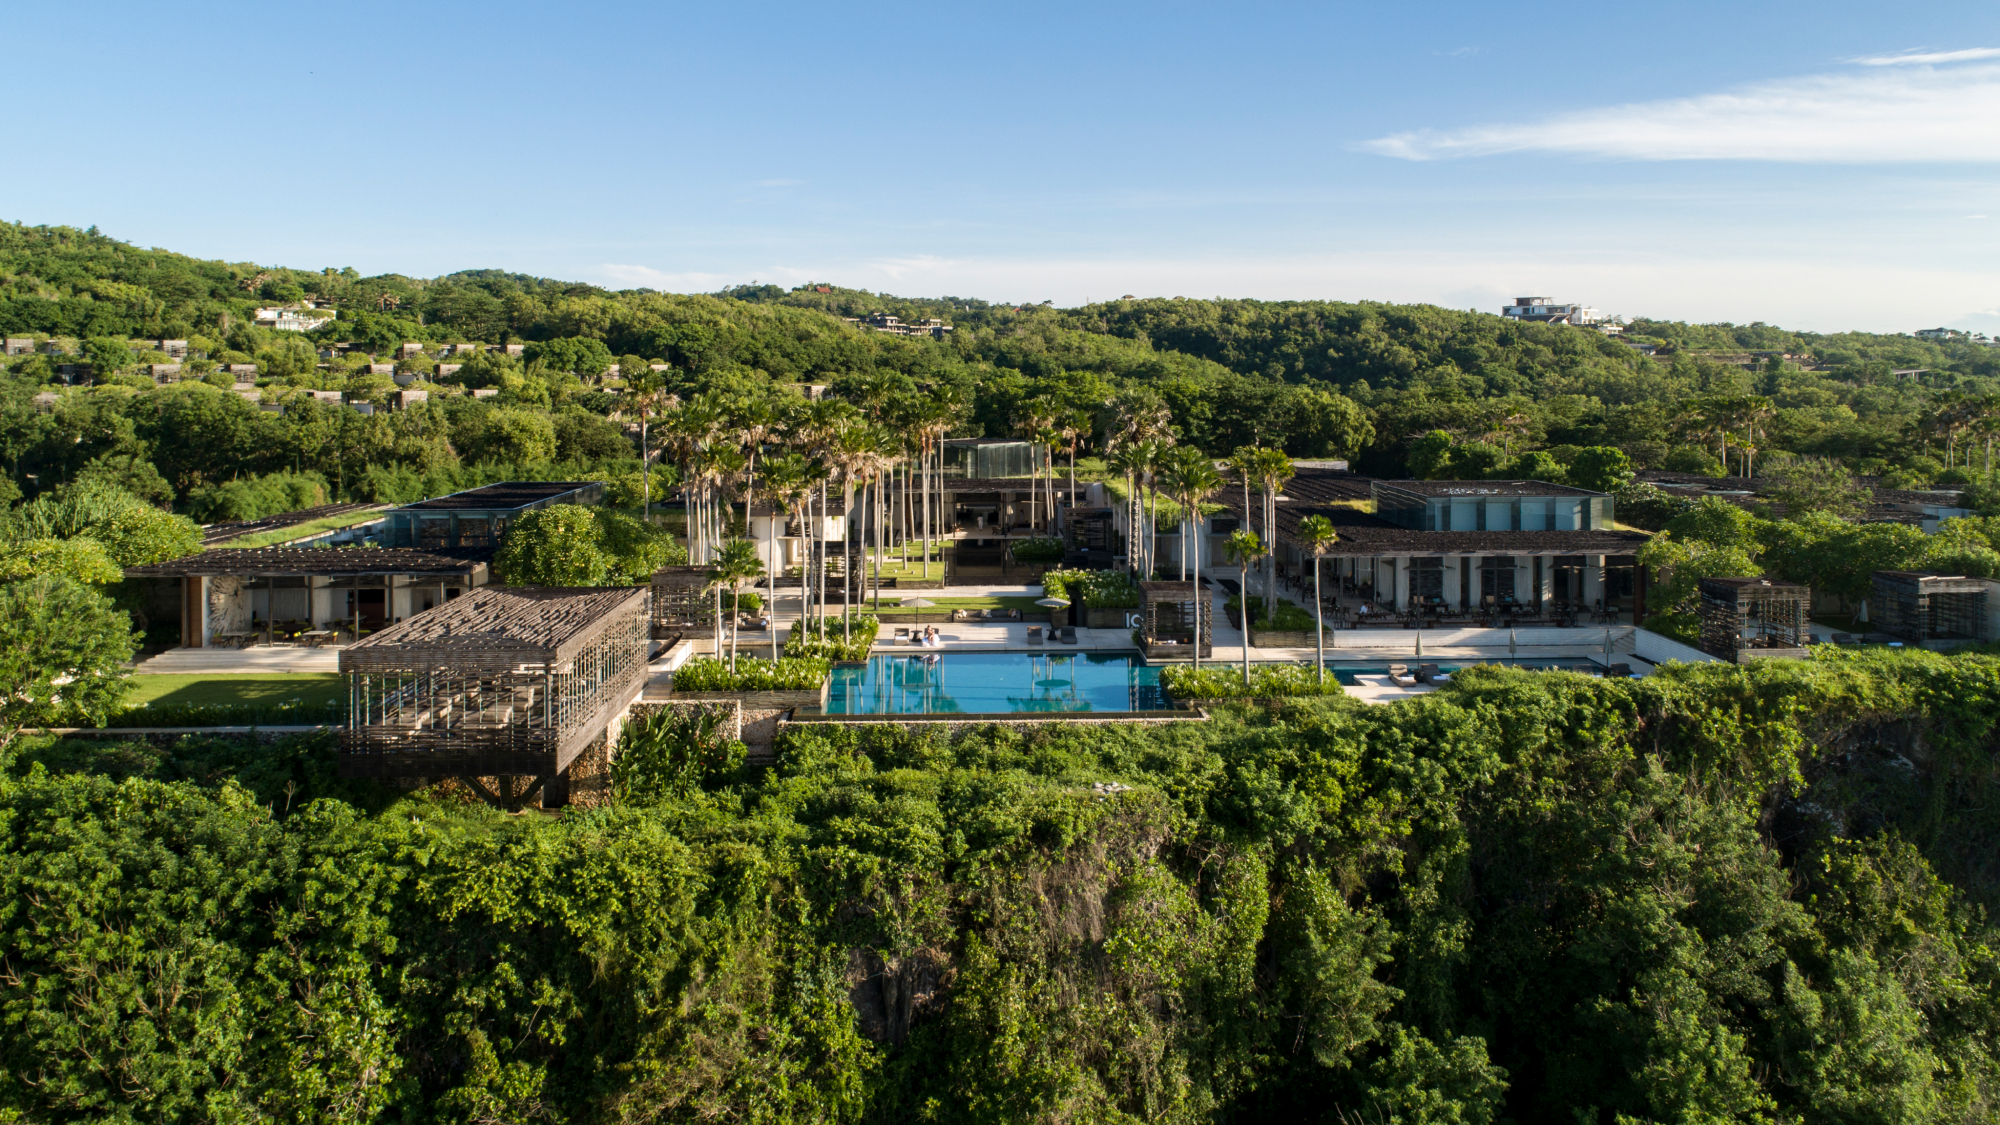 Villa shot from cliff edge in lush greenery